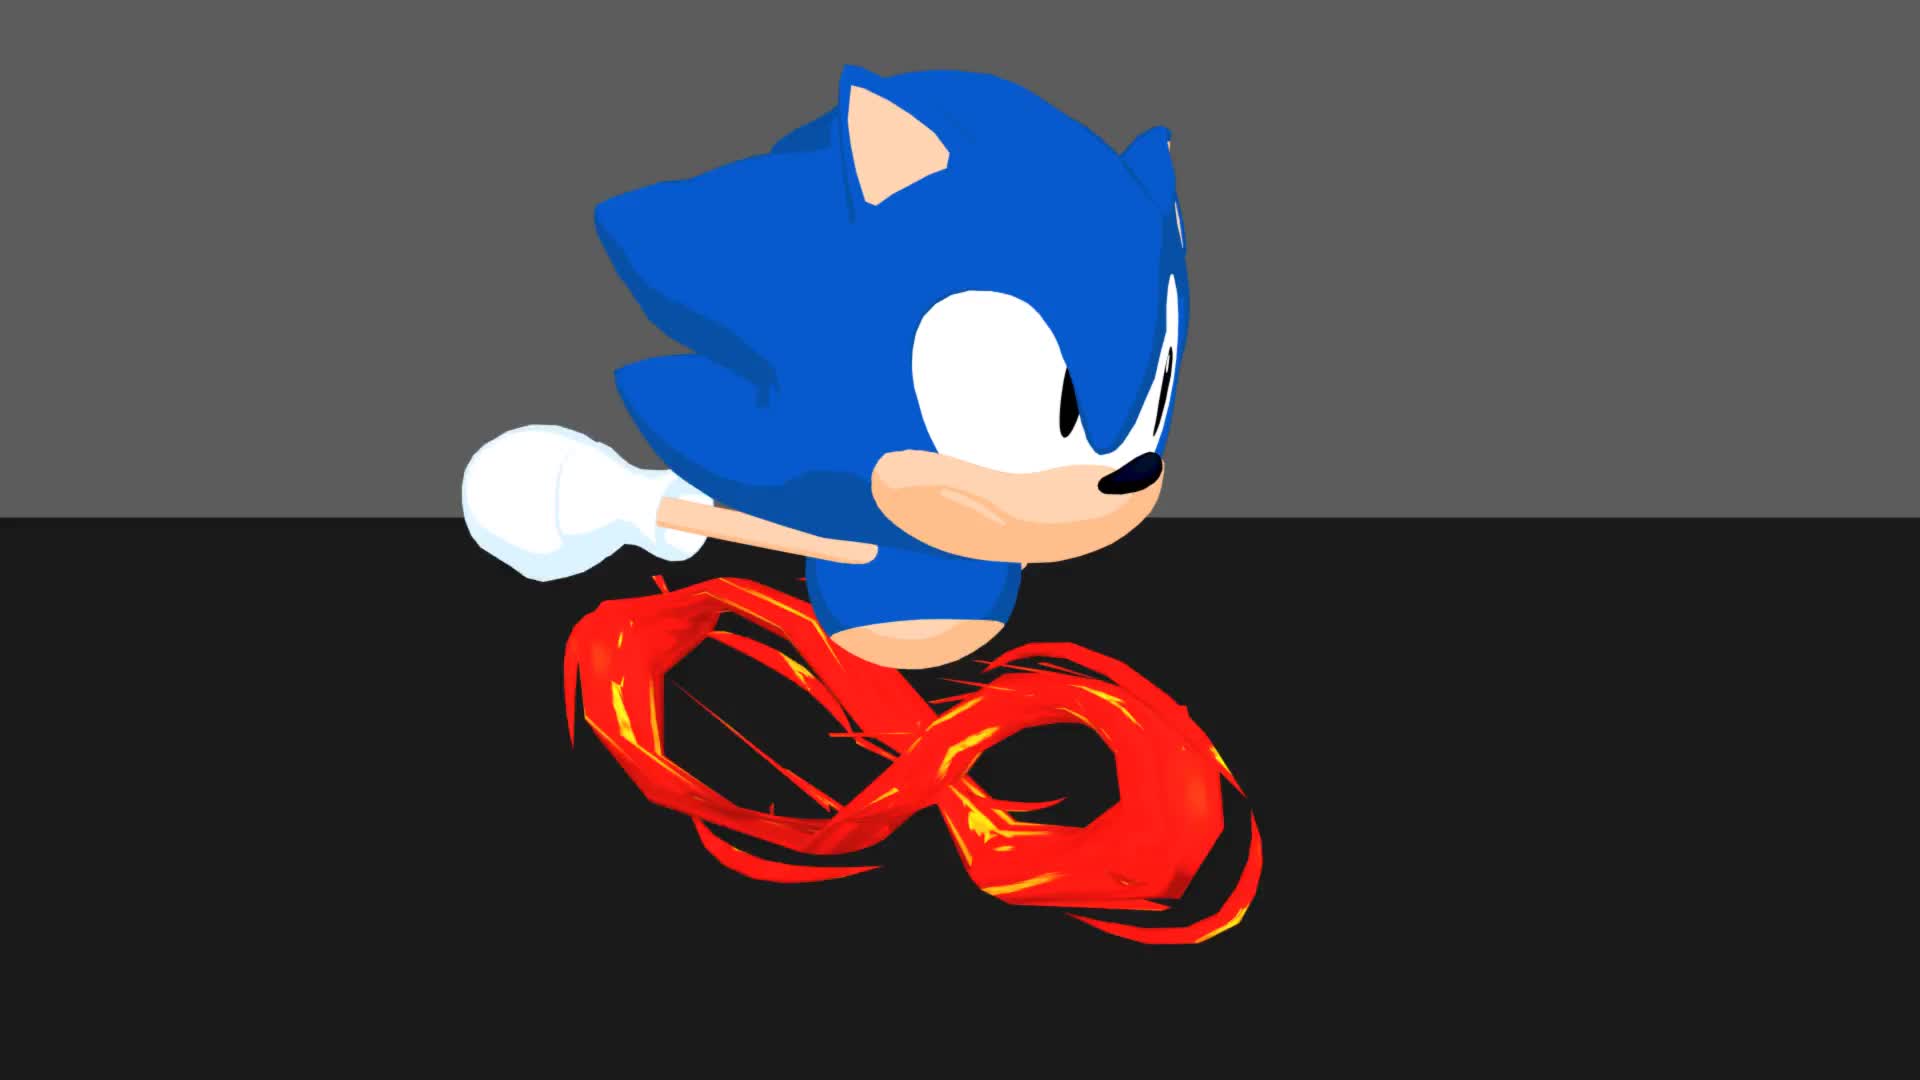 ArtStation - Sonic & Tails Running Together